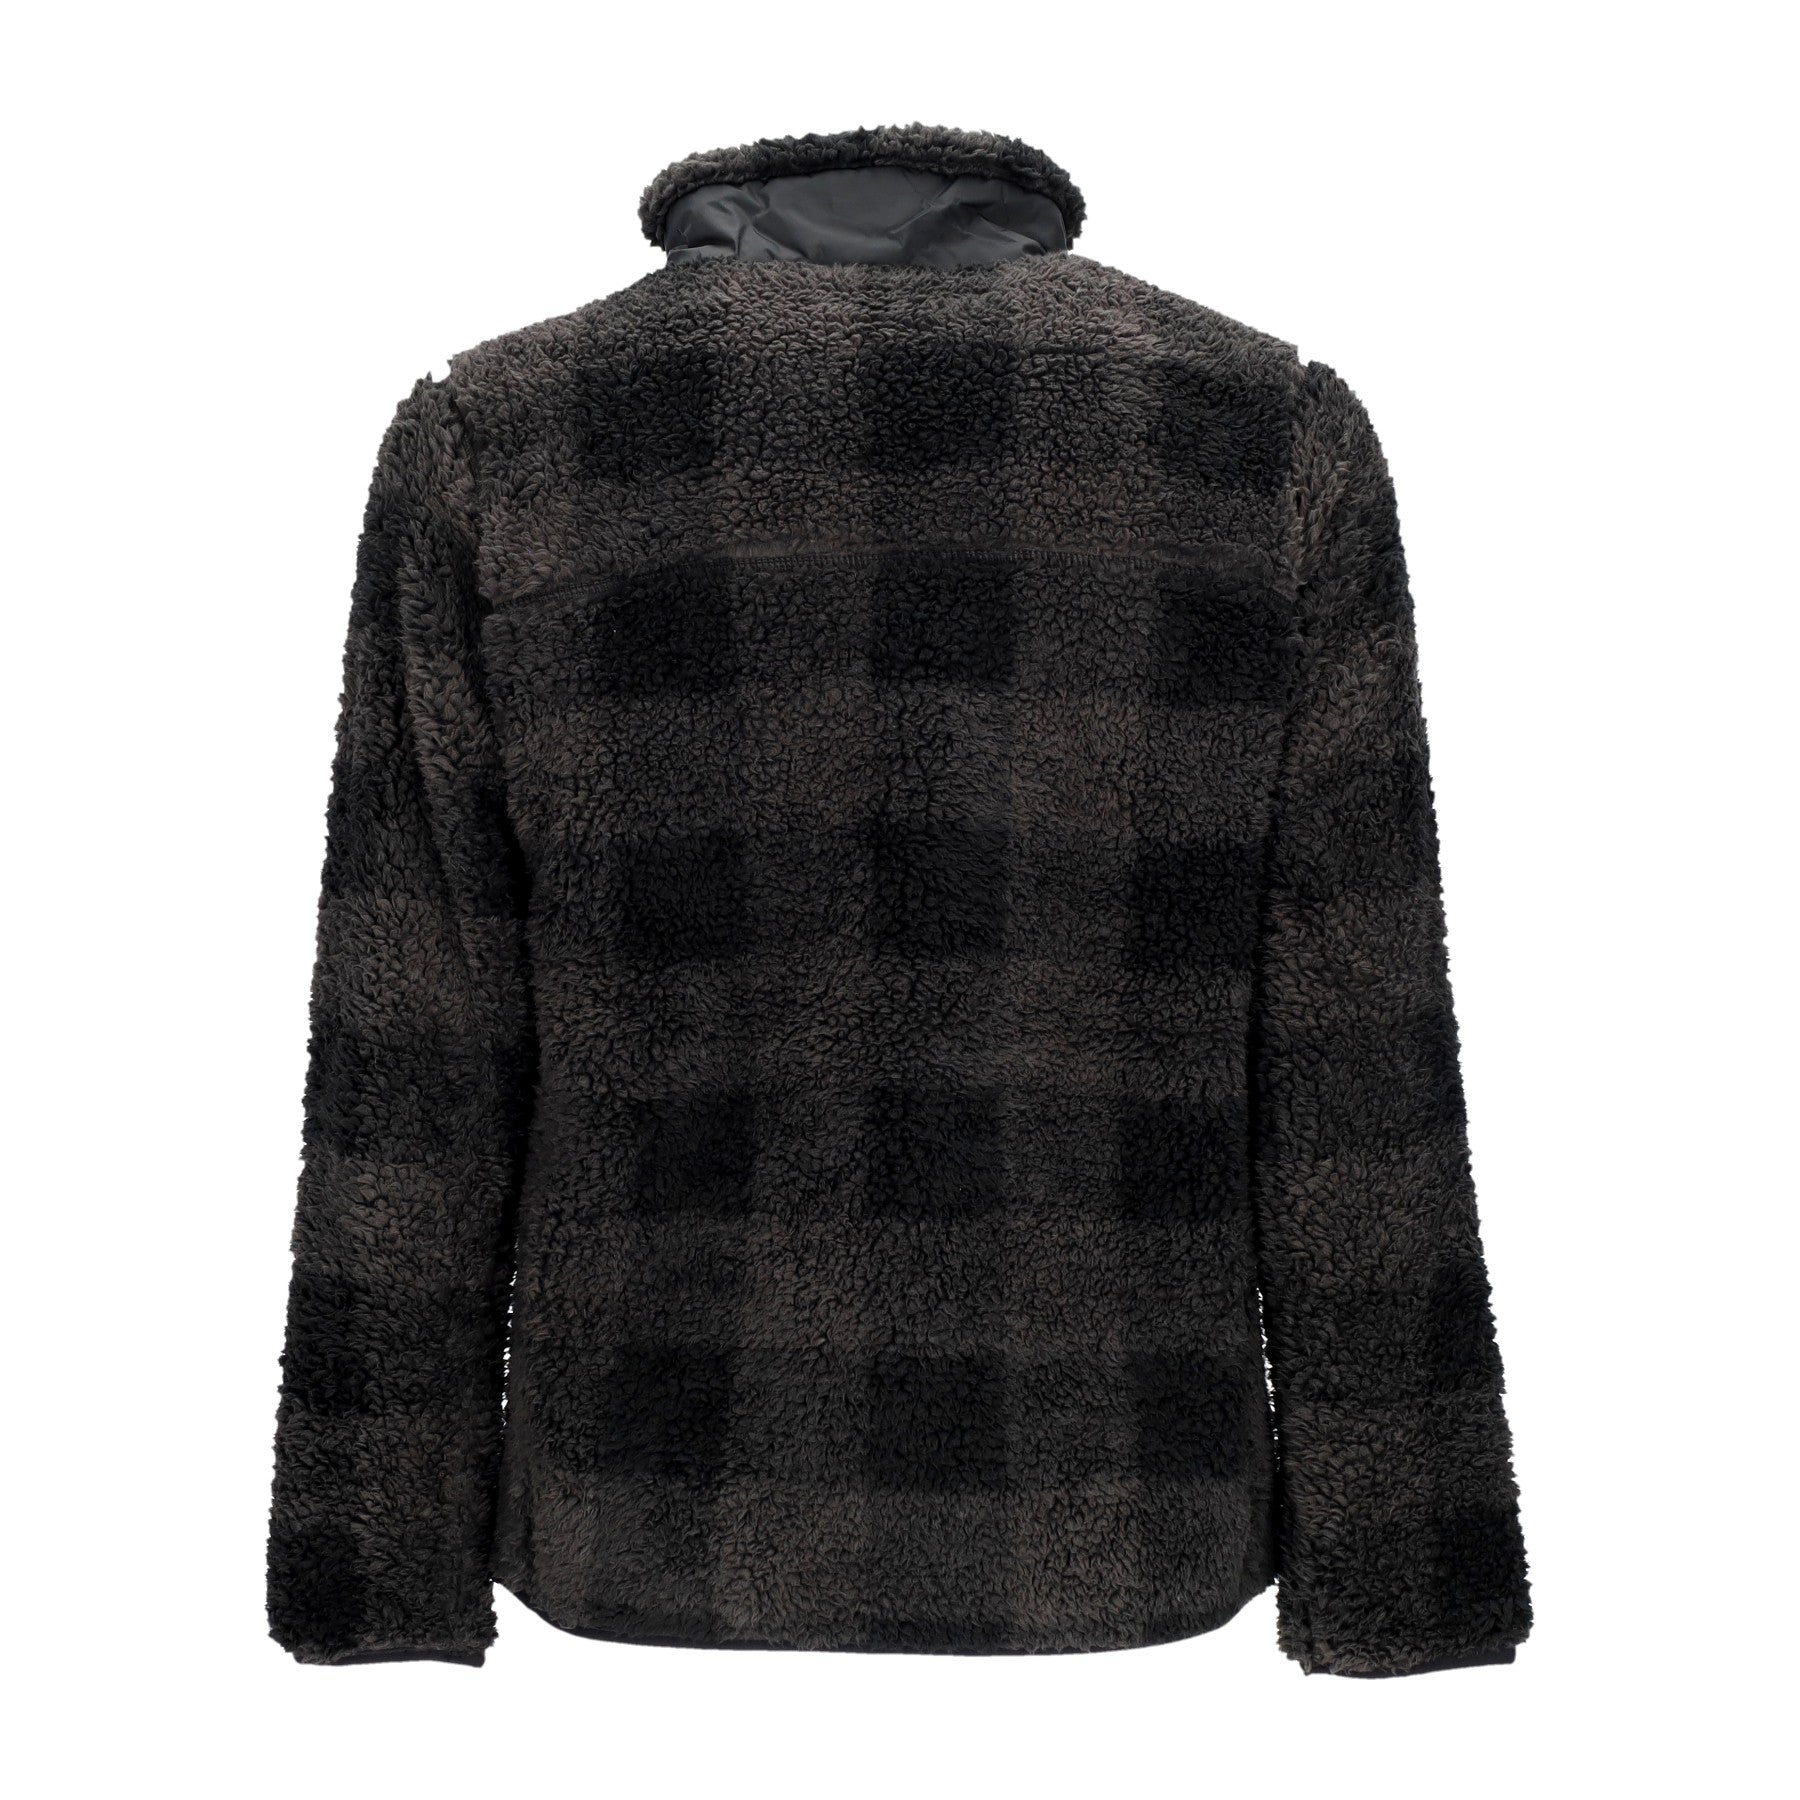 Orsetto Uomo Winter Pass Print Fleece Full Zip Black Checkered